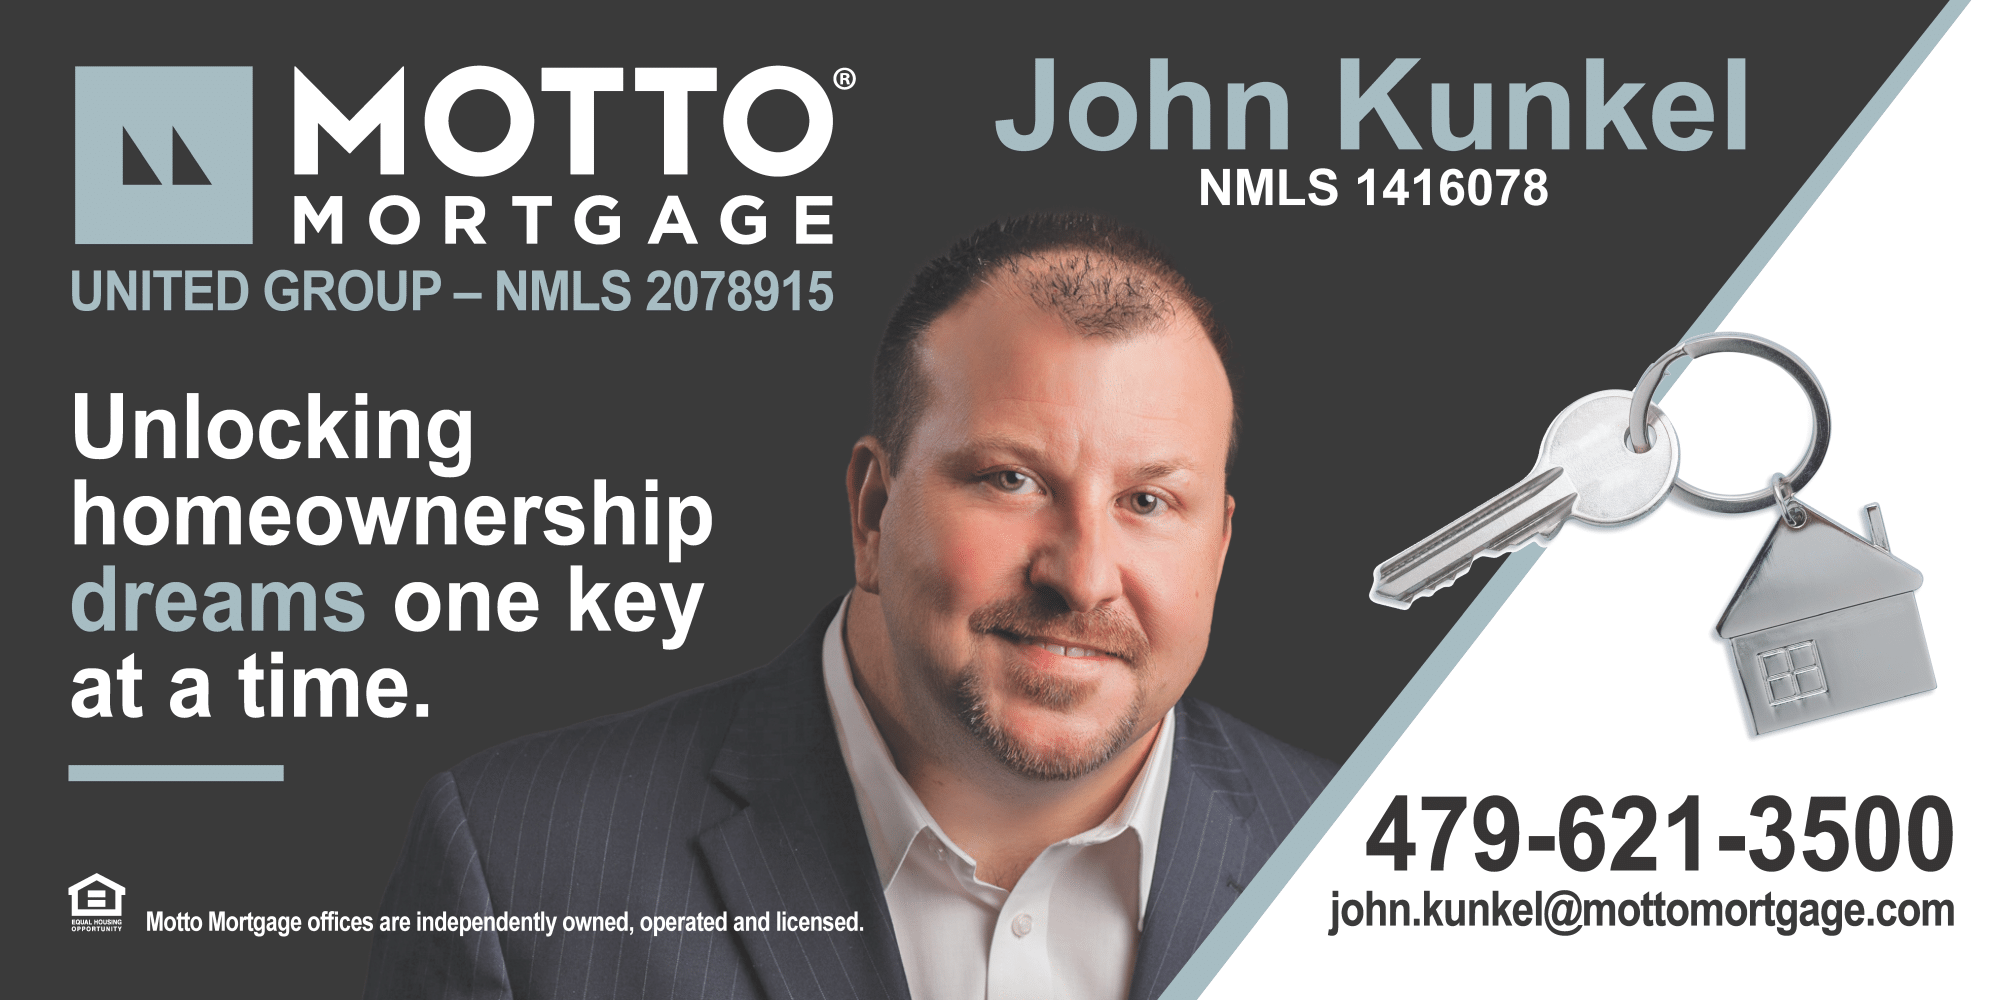 John Kunkel – Motto Mortgage – NMLS 1416078